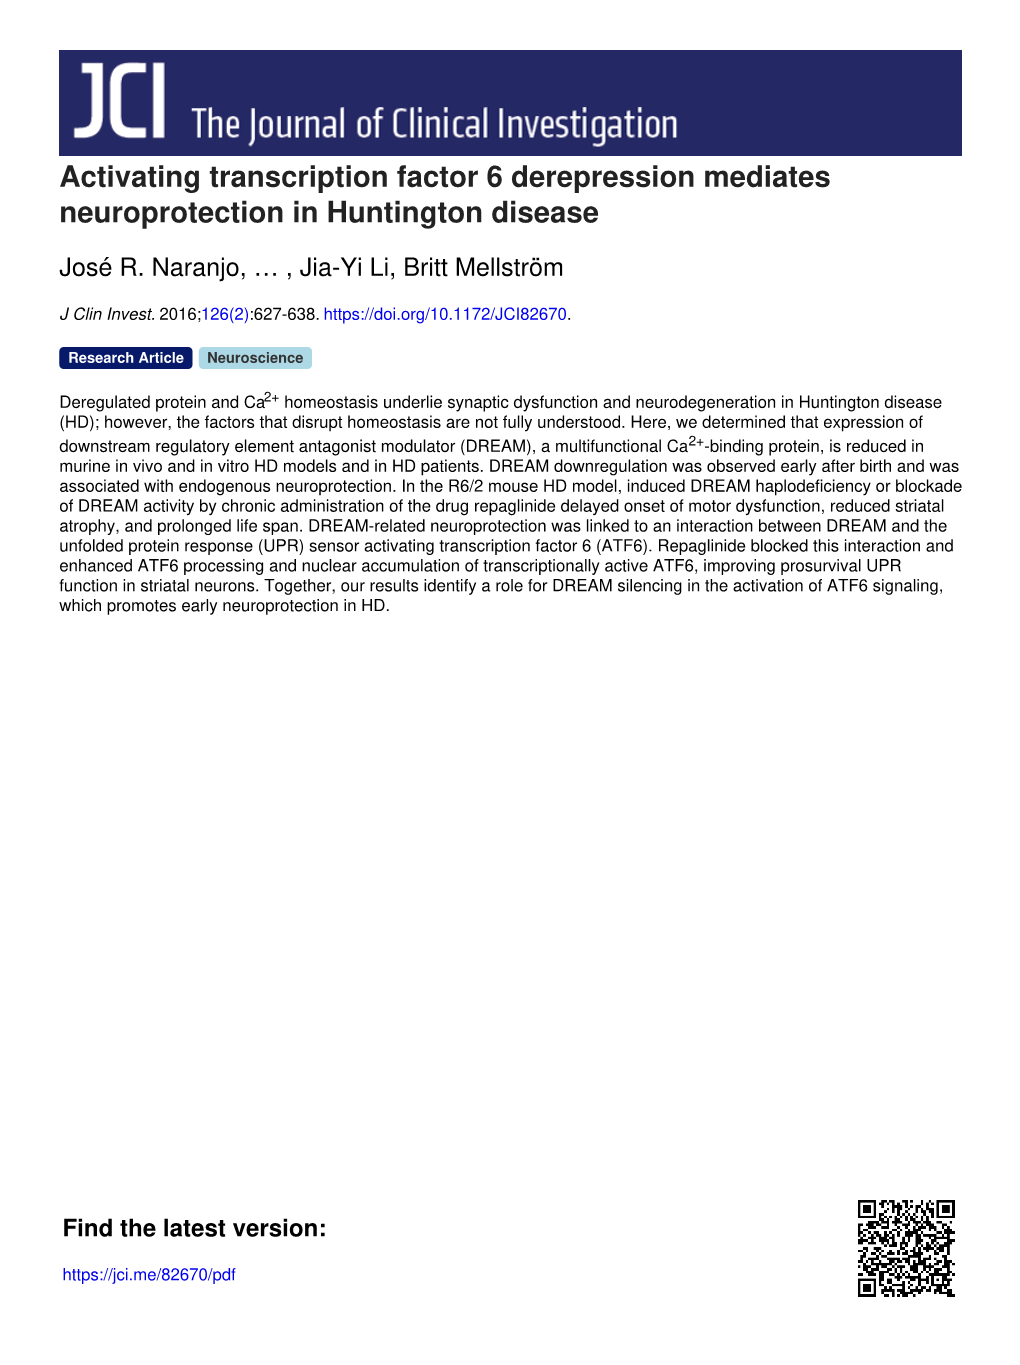 Activating Transcription Factor 6 Derepression Mediates Neuroprotection in Huntington Disease